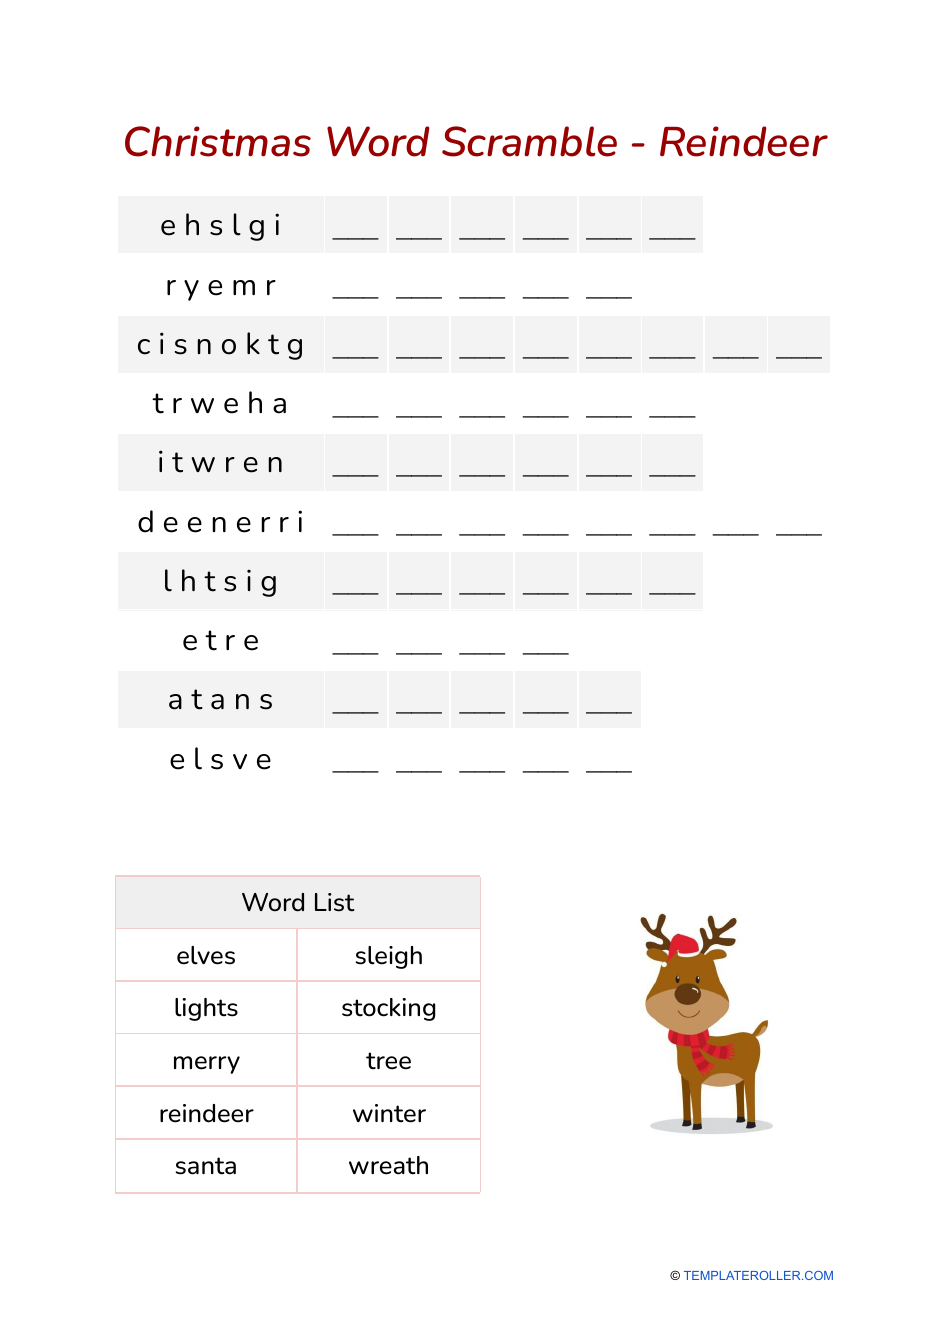 Christmas Word Scramble with Santa's reindeer concept